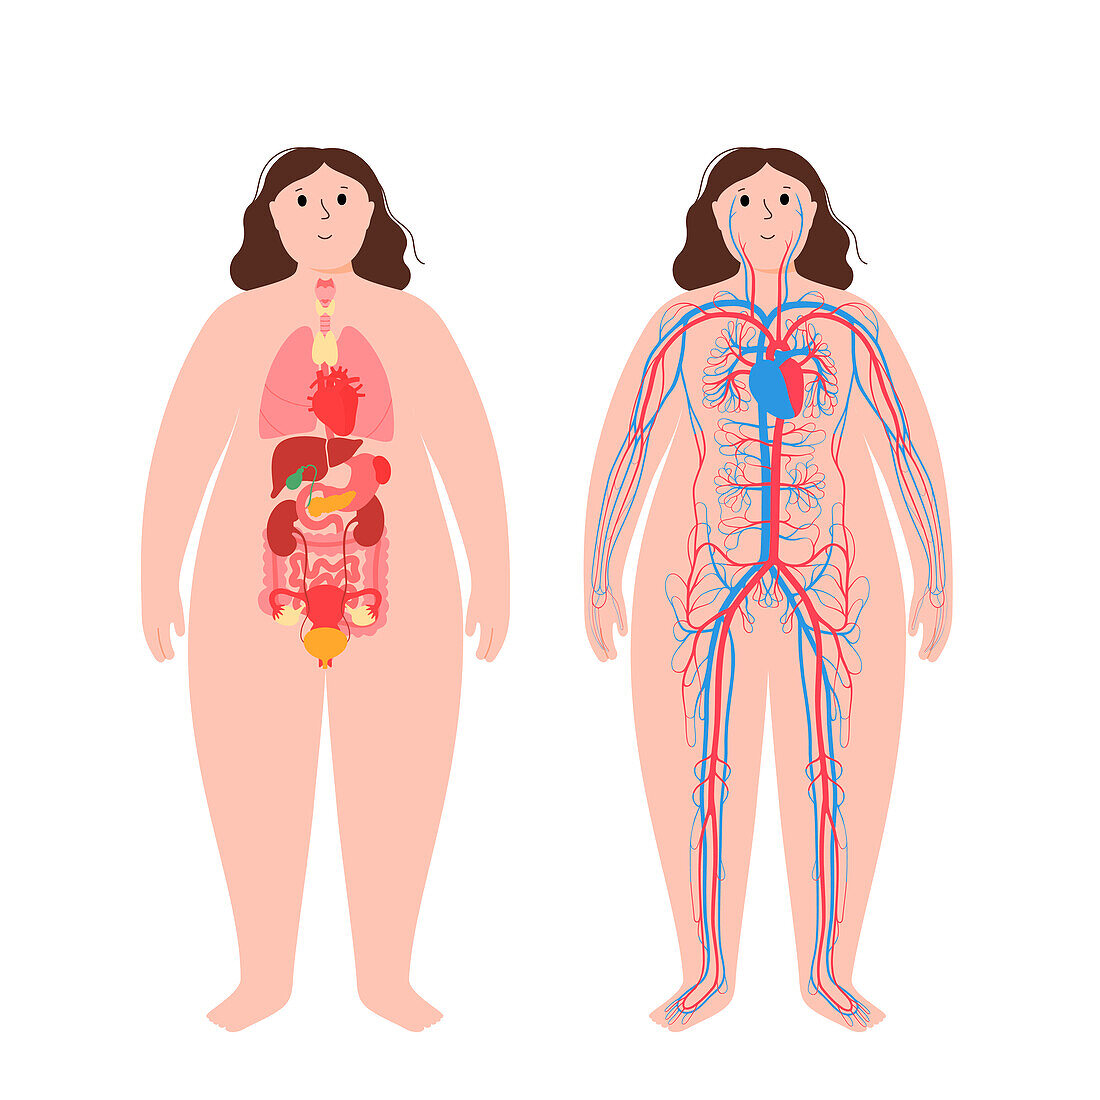 Organs and cardiovascular system, illustration